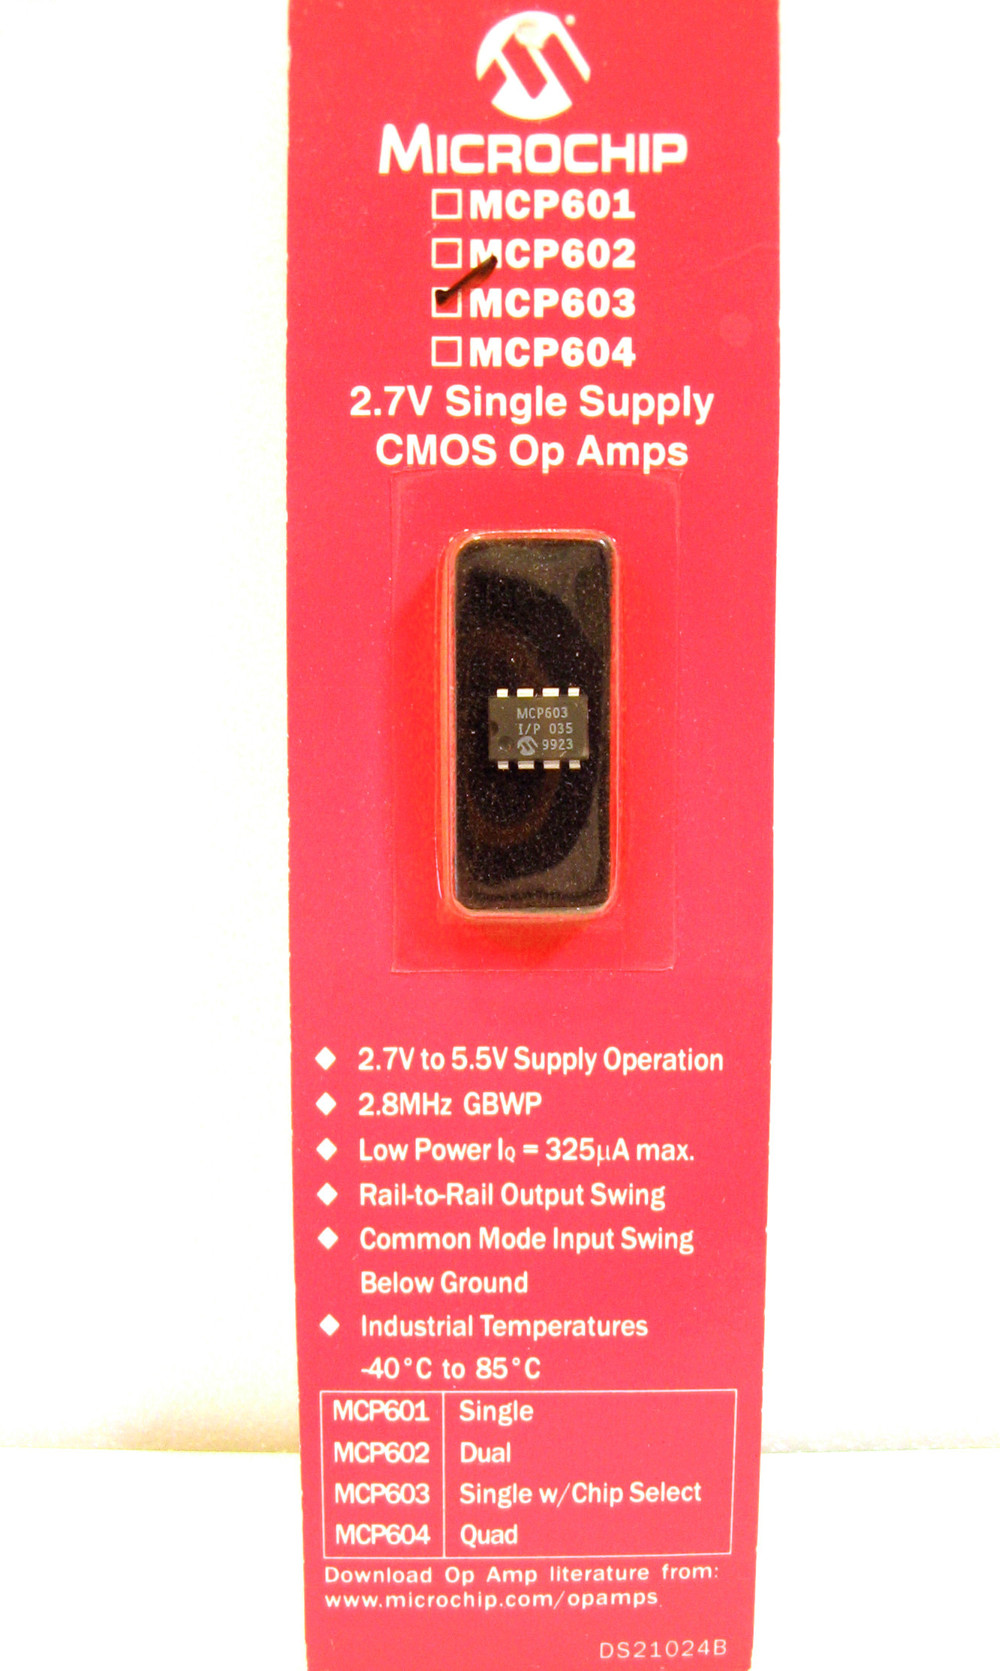 1 Stück - Microchip - MCP603 - 2.7V Single Supply CMOS Op Amps - Neu + OVP